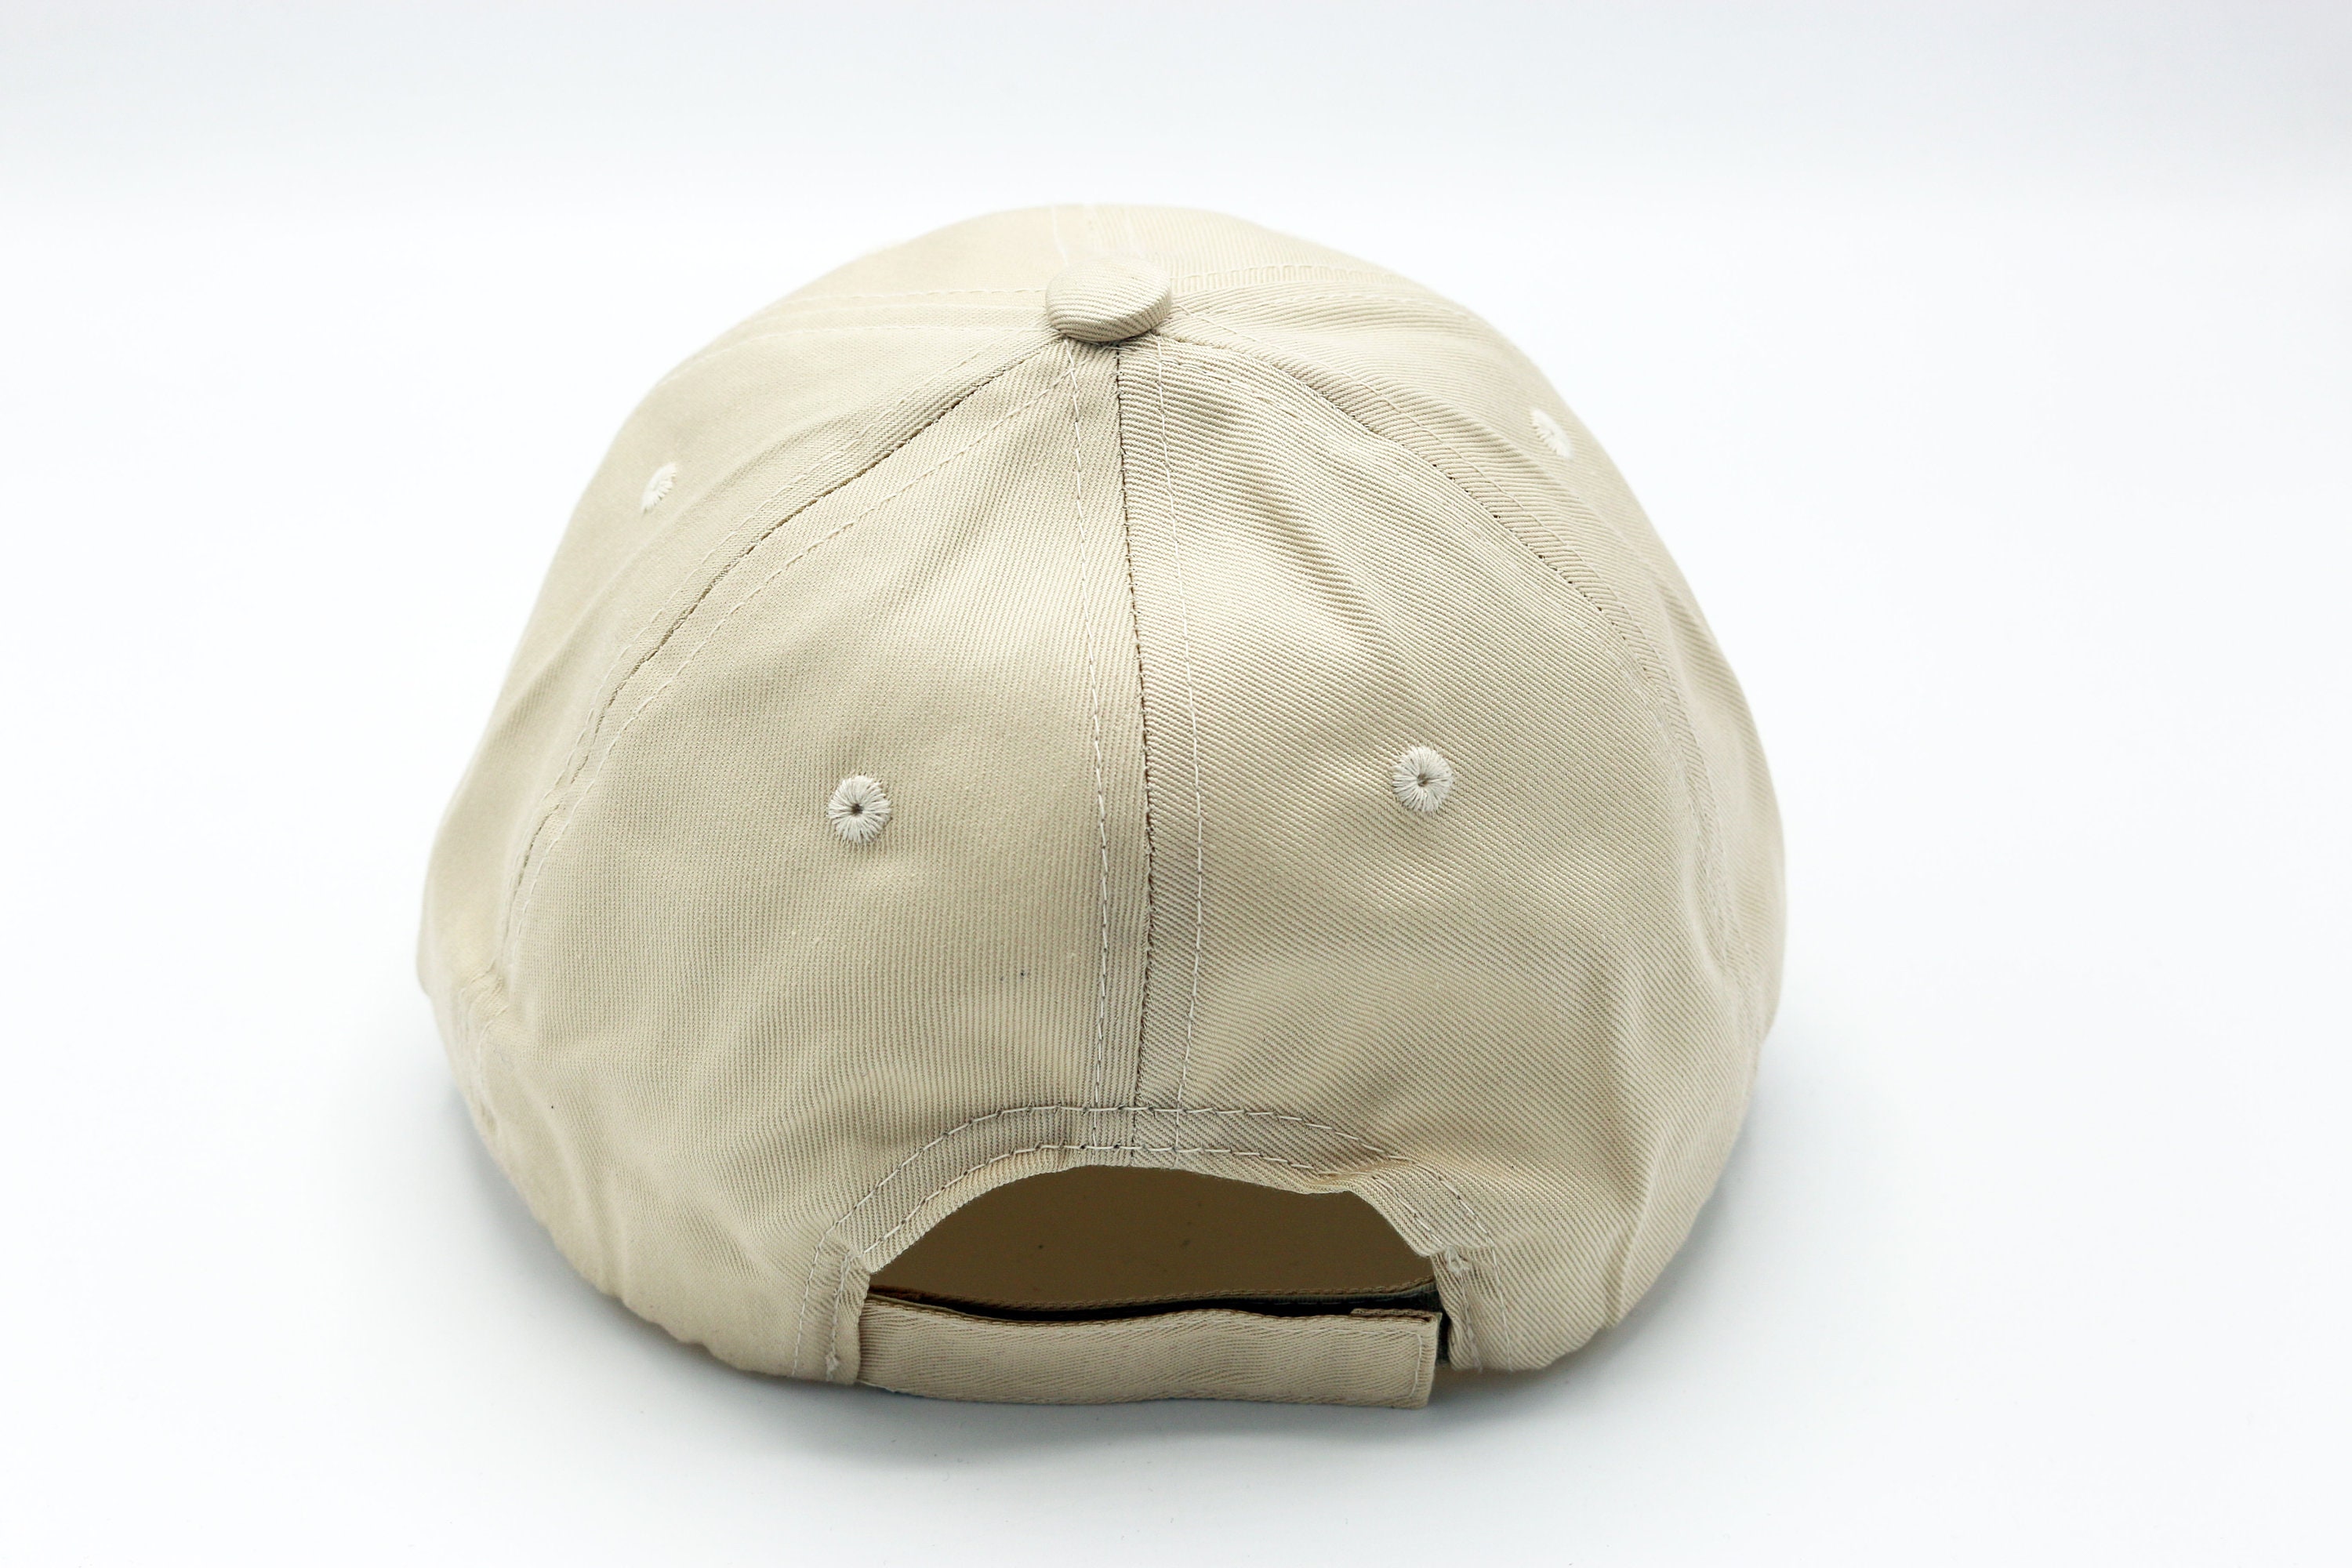 Beige Baseball Cap Baseball Hat Men Summer Hat Adjustable | Etsy